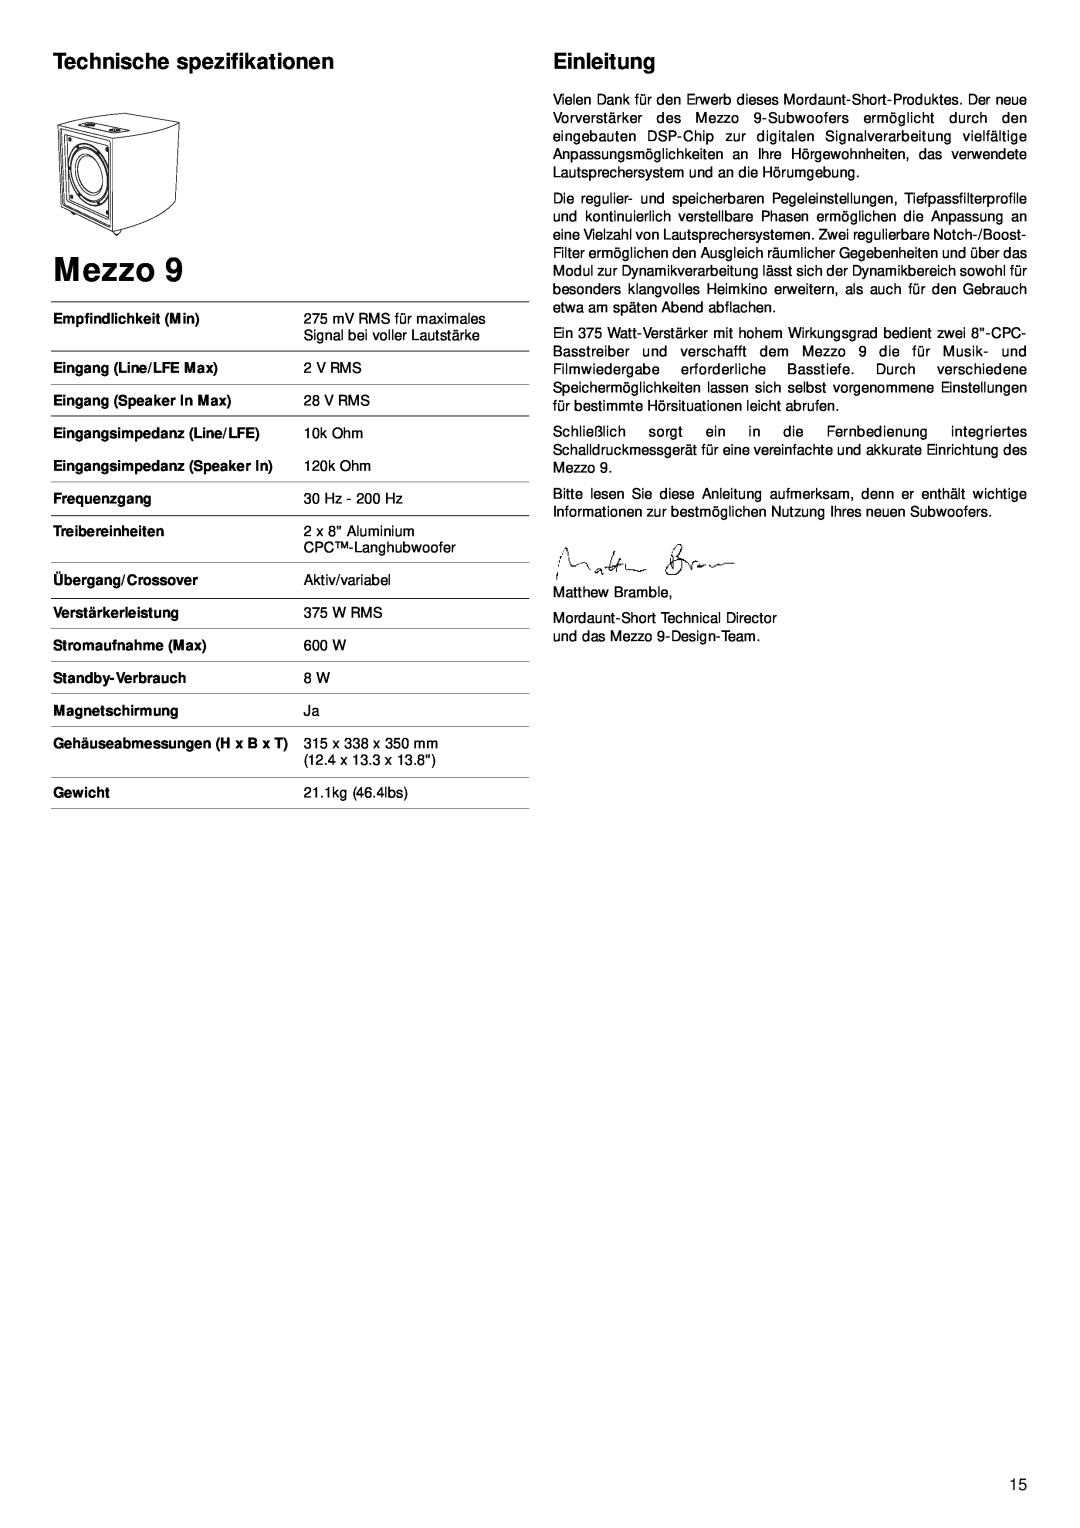 Mordaunt-Short 9 manual Technische spezifikationen, Einleitung, Mezzo 